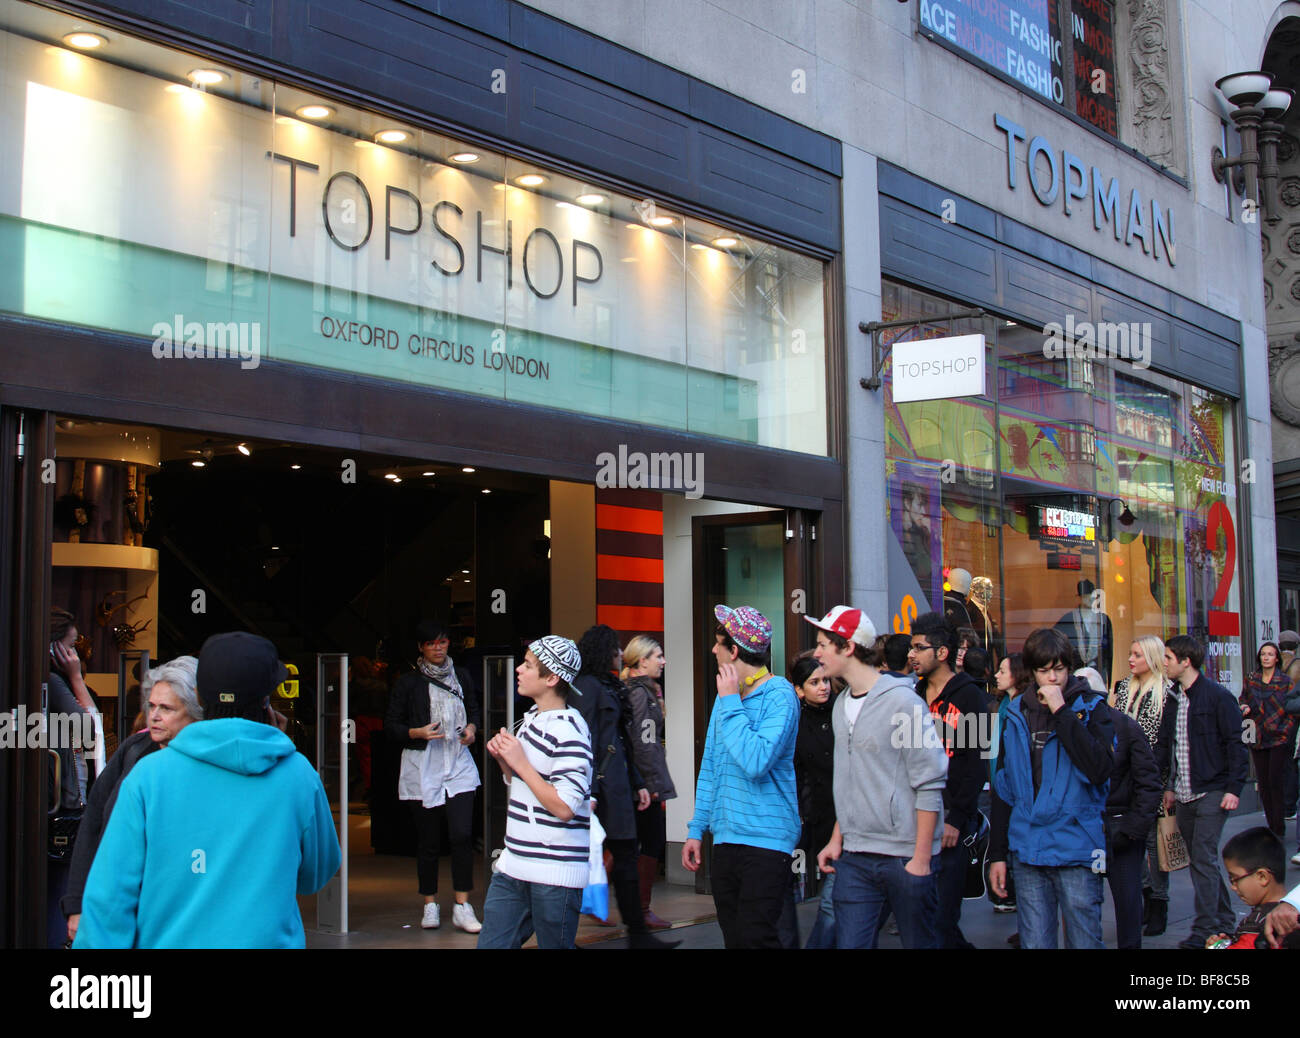 The Topshop retail fashion outlet, Oxford Street, London, England, U.K  Stock Photo - Alamy